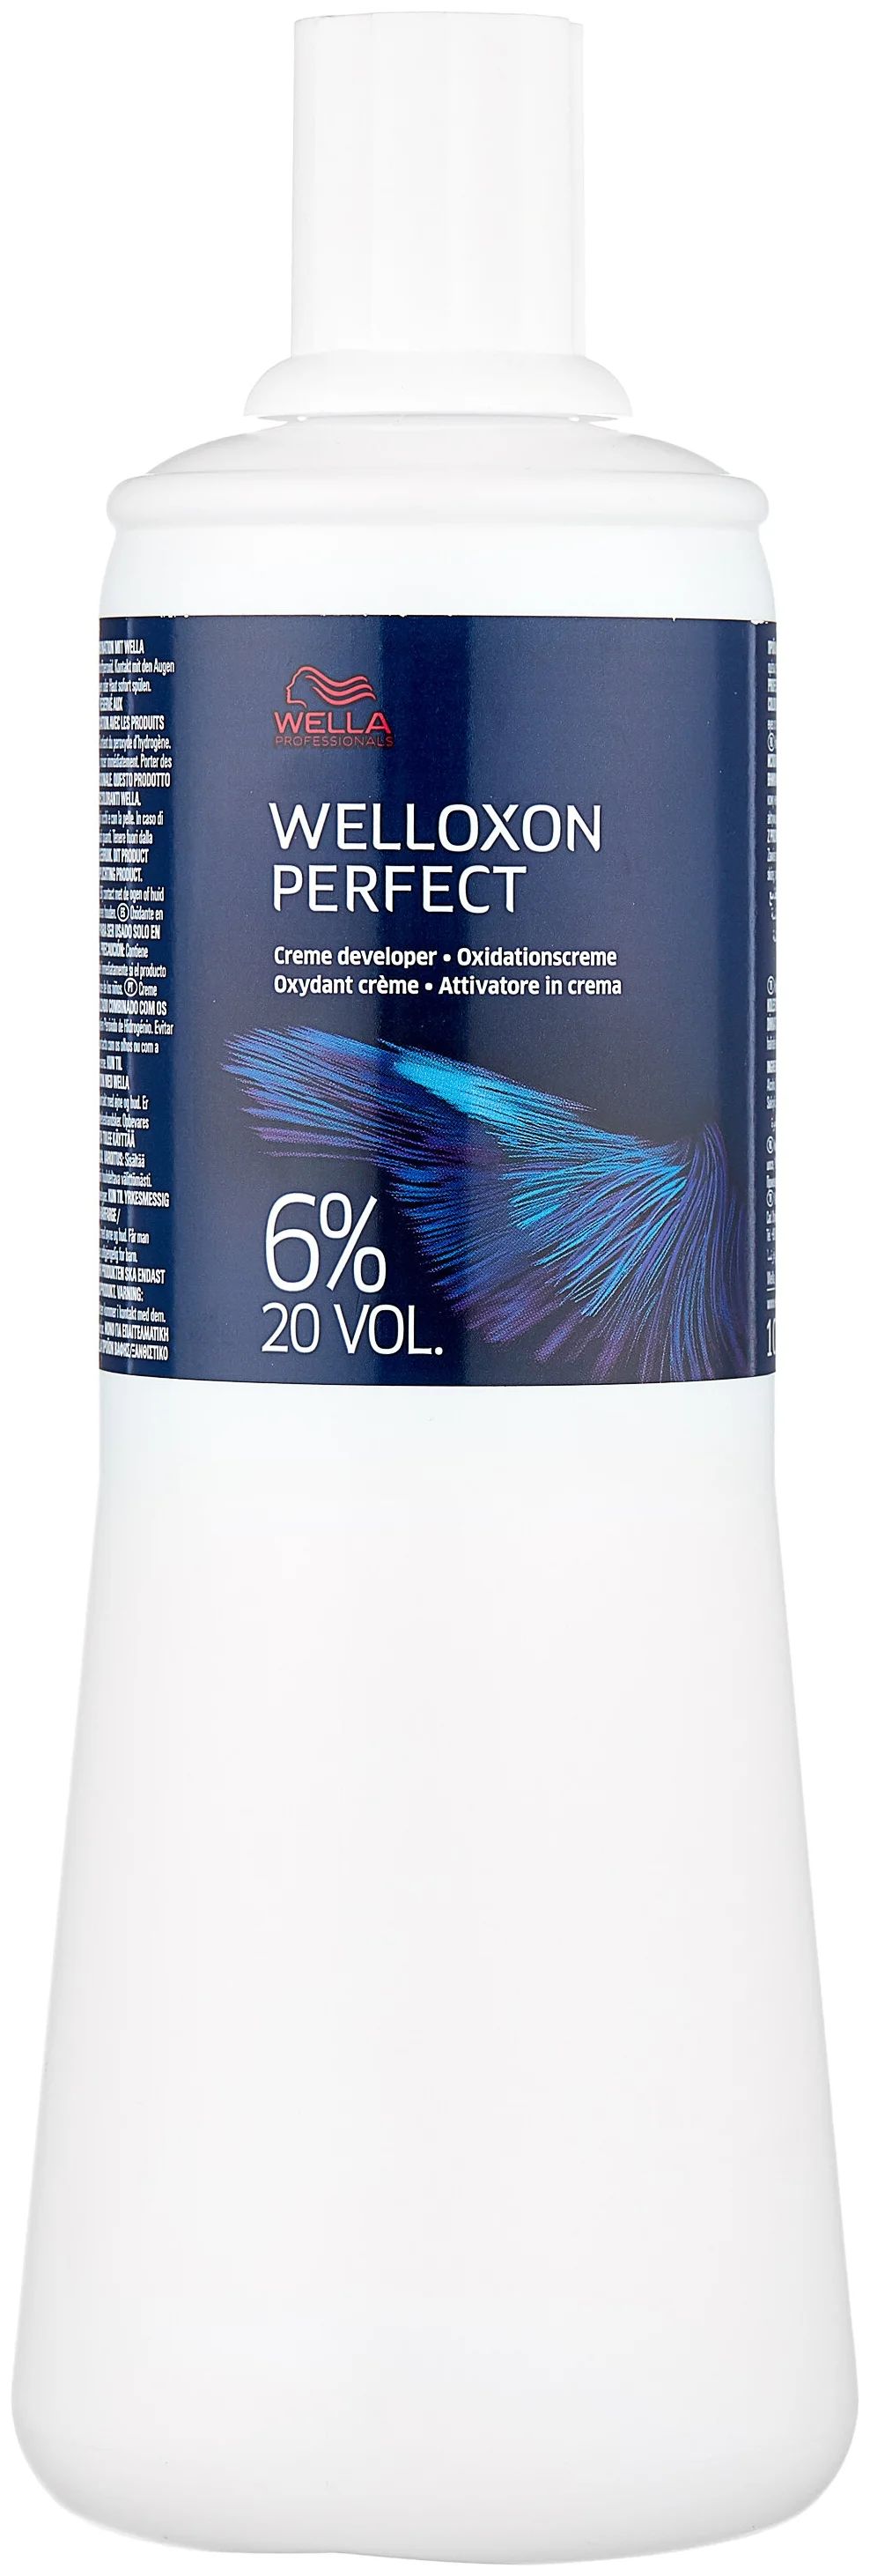 Краска для волос Wella Welloxon Koleston Perfect 6% крем-проявитель, 1 л окислитель wella professionals welloxon perfect 1 9% 1000 мл